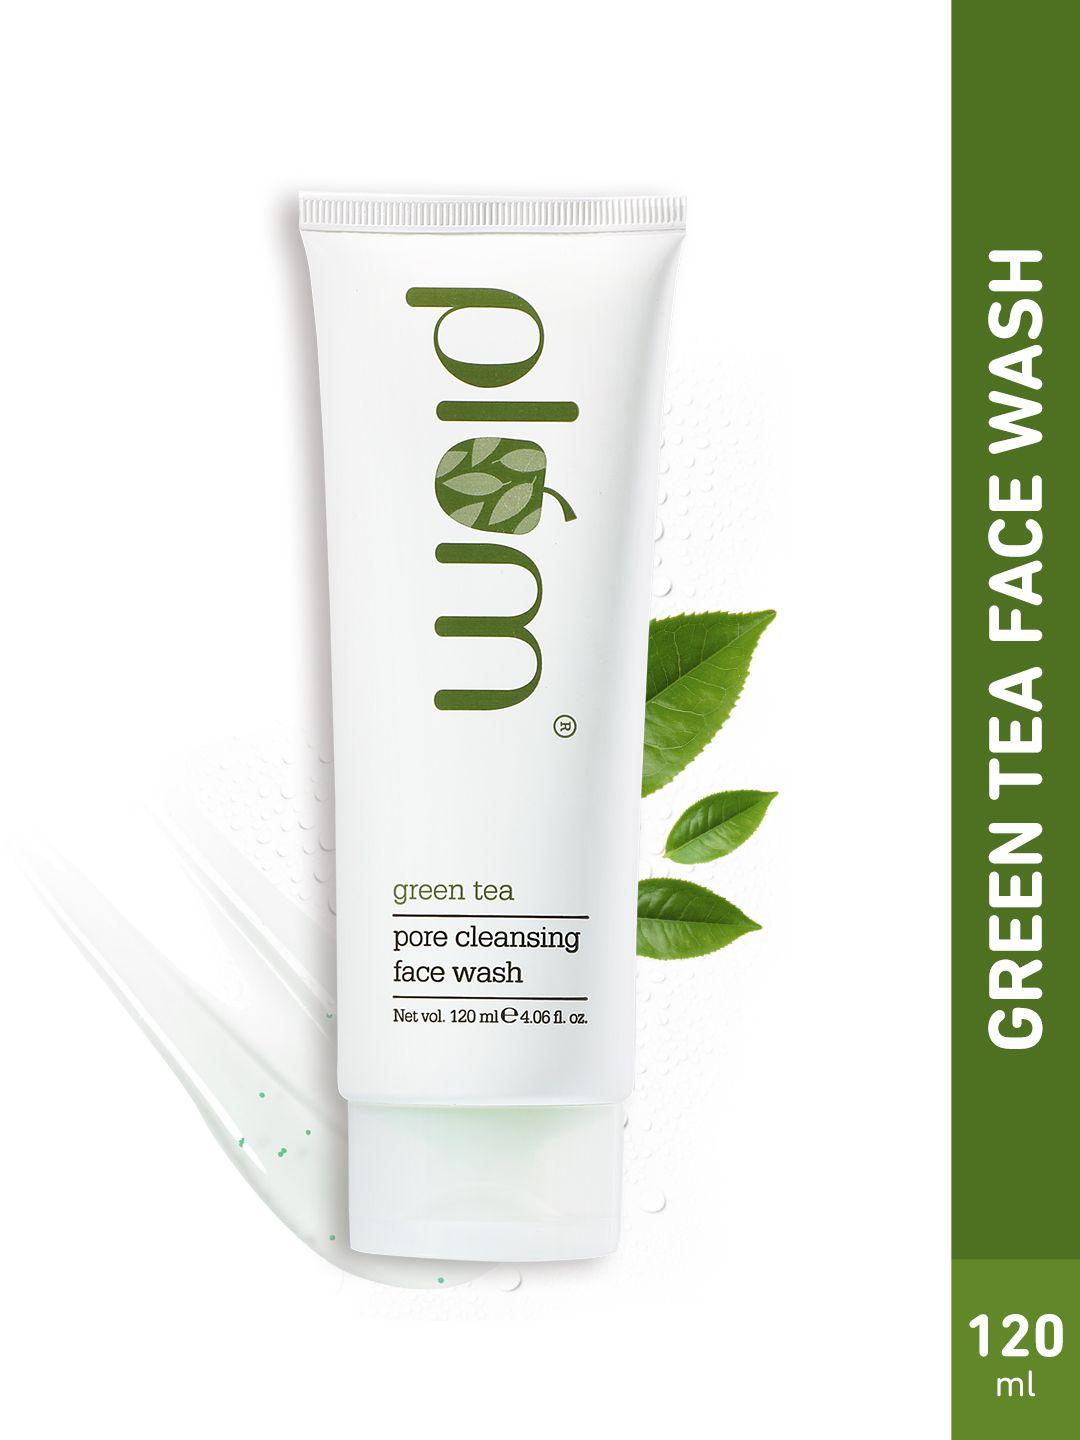 plum green tea range pore cleansing face wash - 120 ml